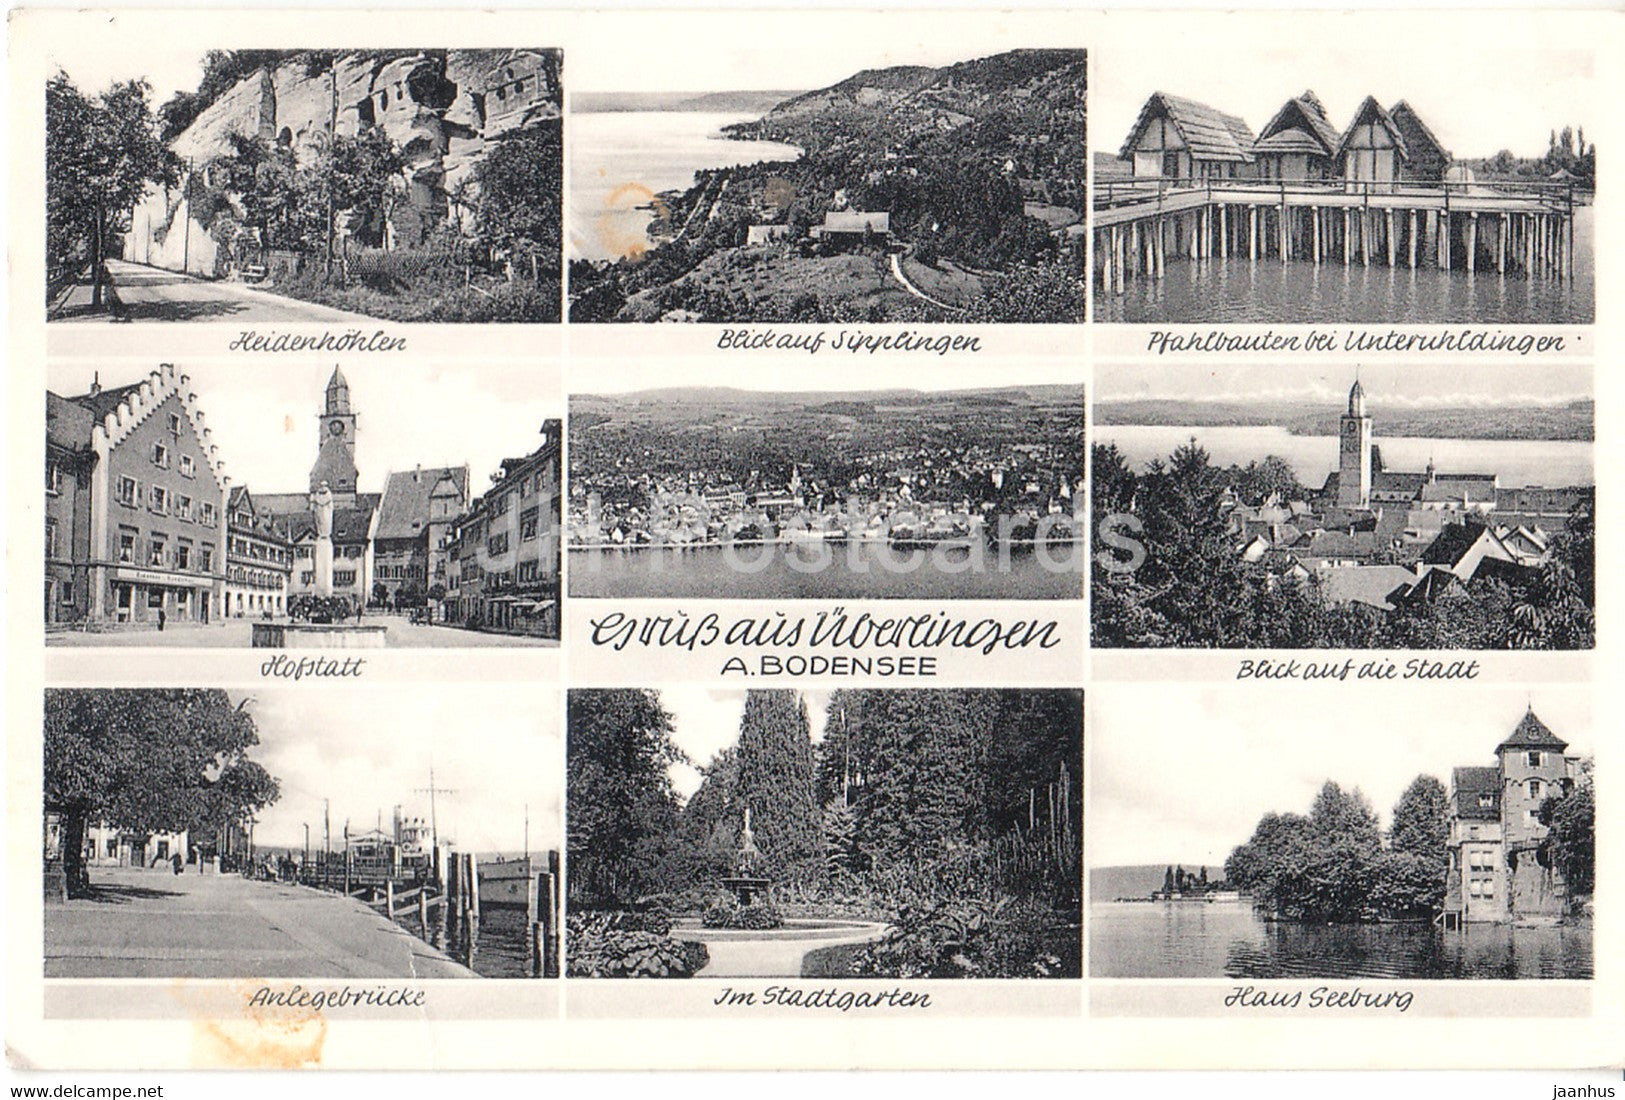 Gruss aus Uberlingen a Bodensee - Heidenhohlen - Hofstatt - Haus Seeburg - old postcard - 1953 - Germany - used - JH Postcards